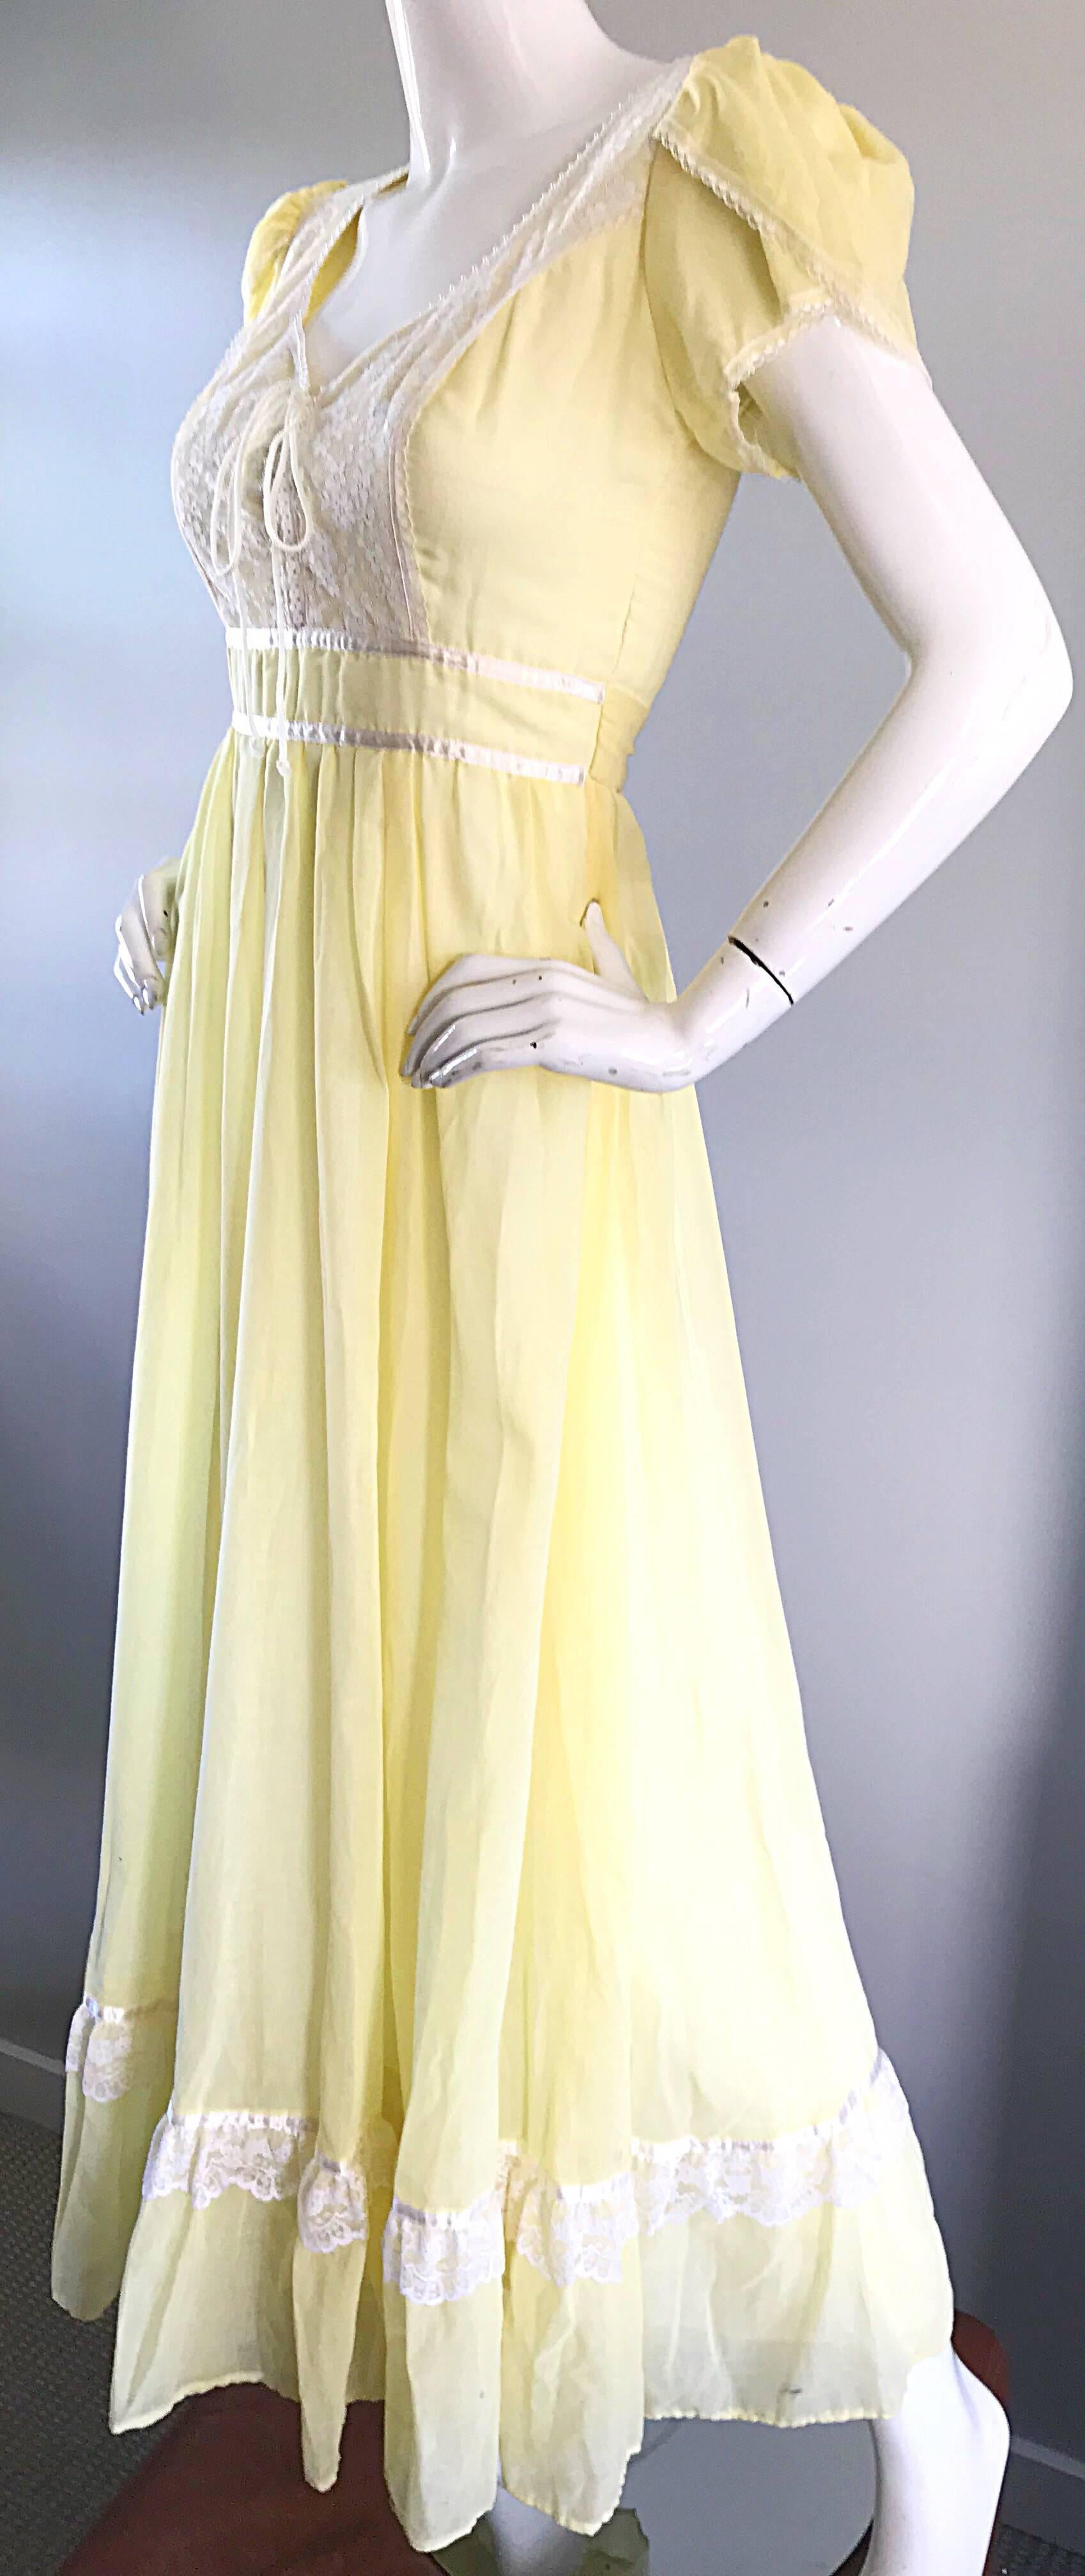 Women's 1970s Pale Yellow White Cotton Voile Pearl Encrusted Vintage 70s Boho Maxi Dress